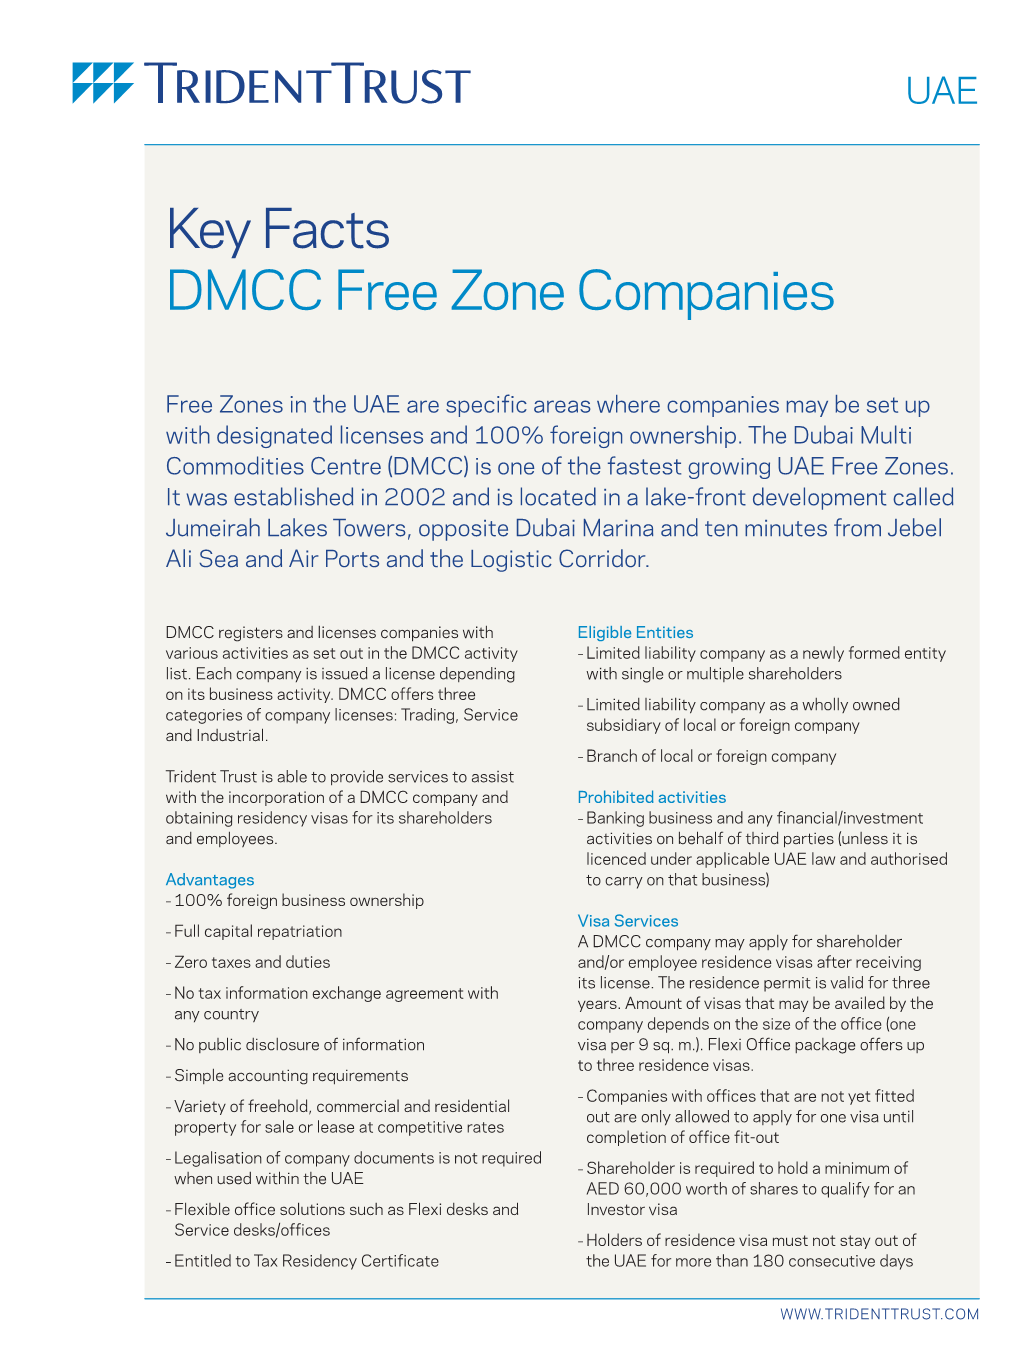 UAE DMCC Free Zone Companies Key Facts